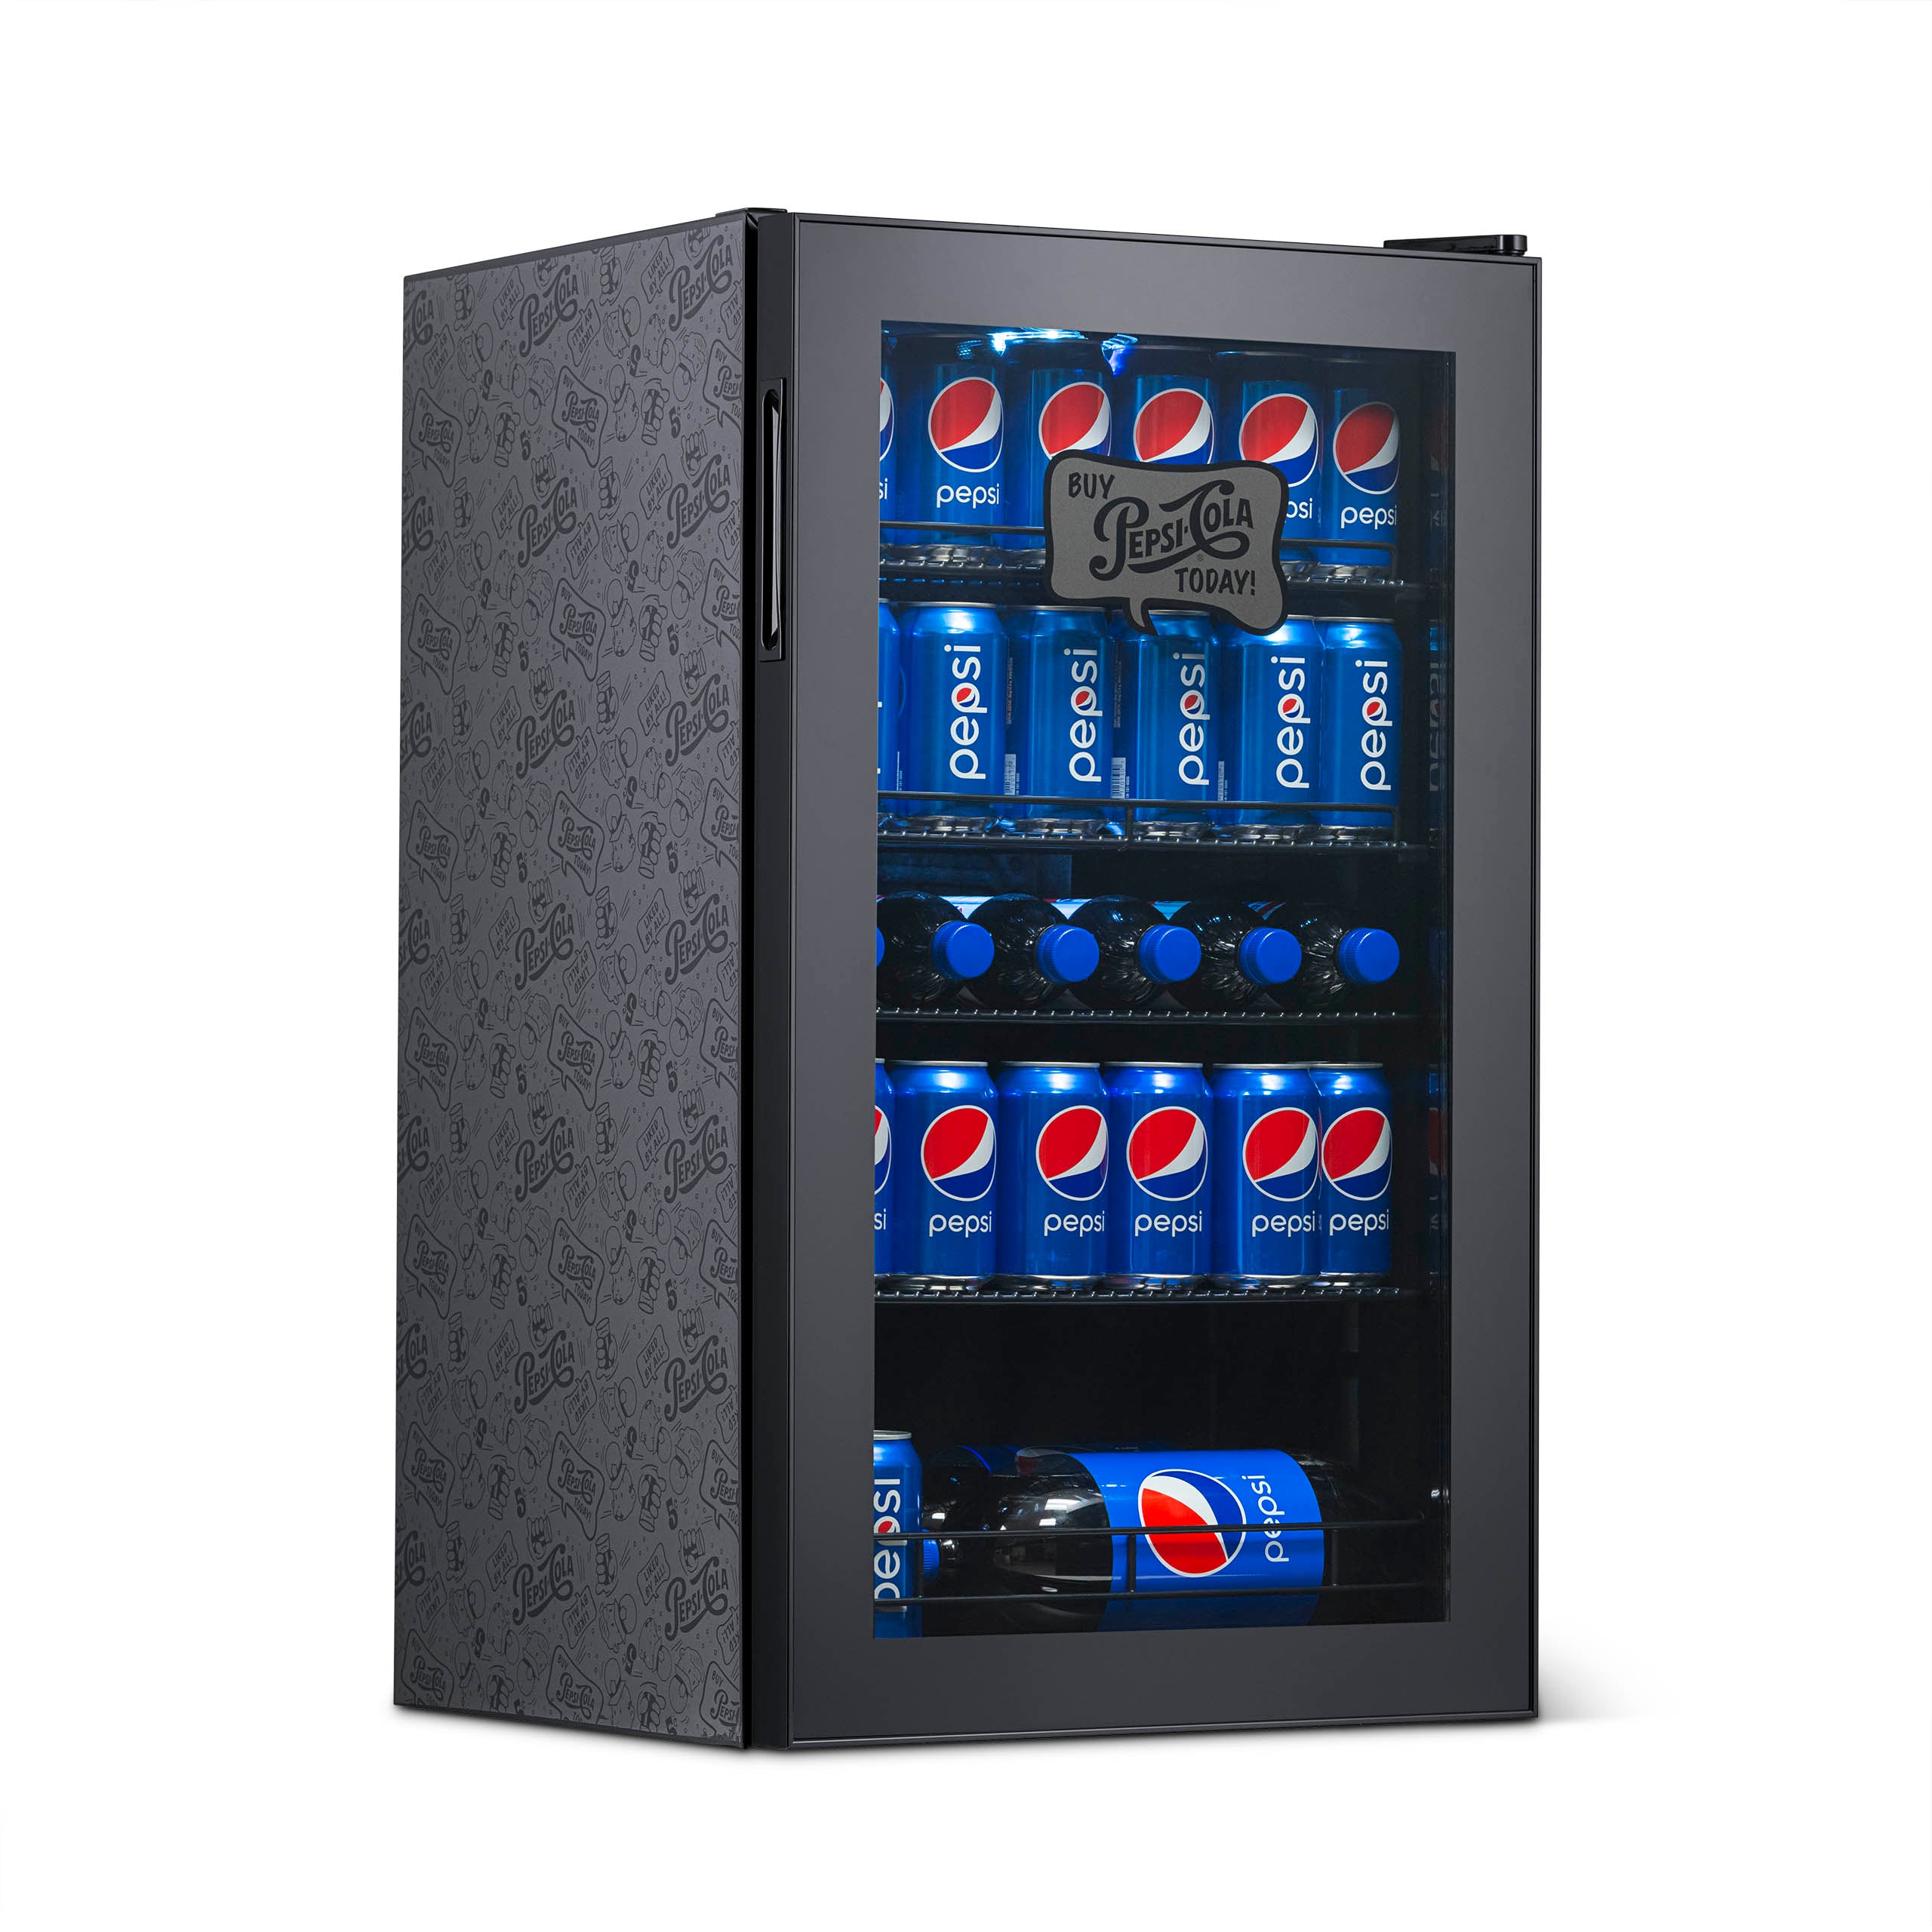 mini drink refrigerator